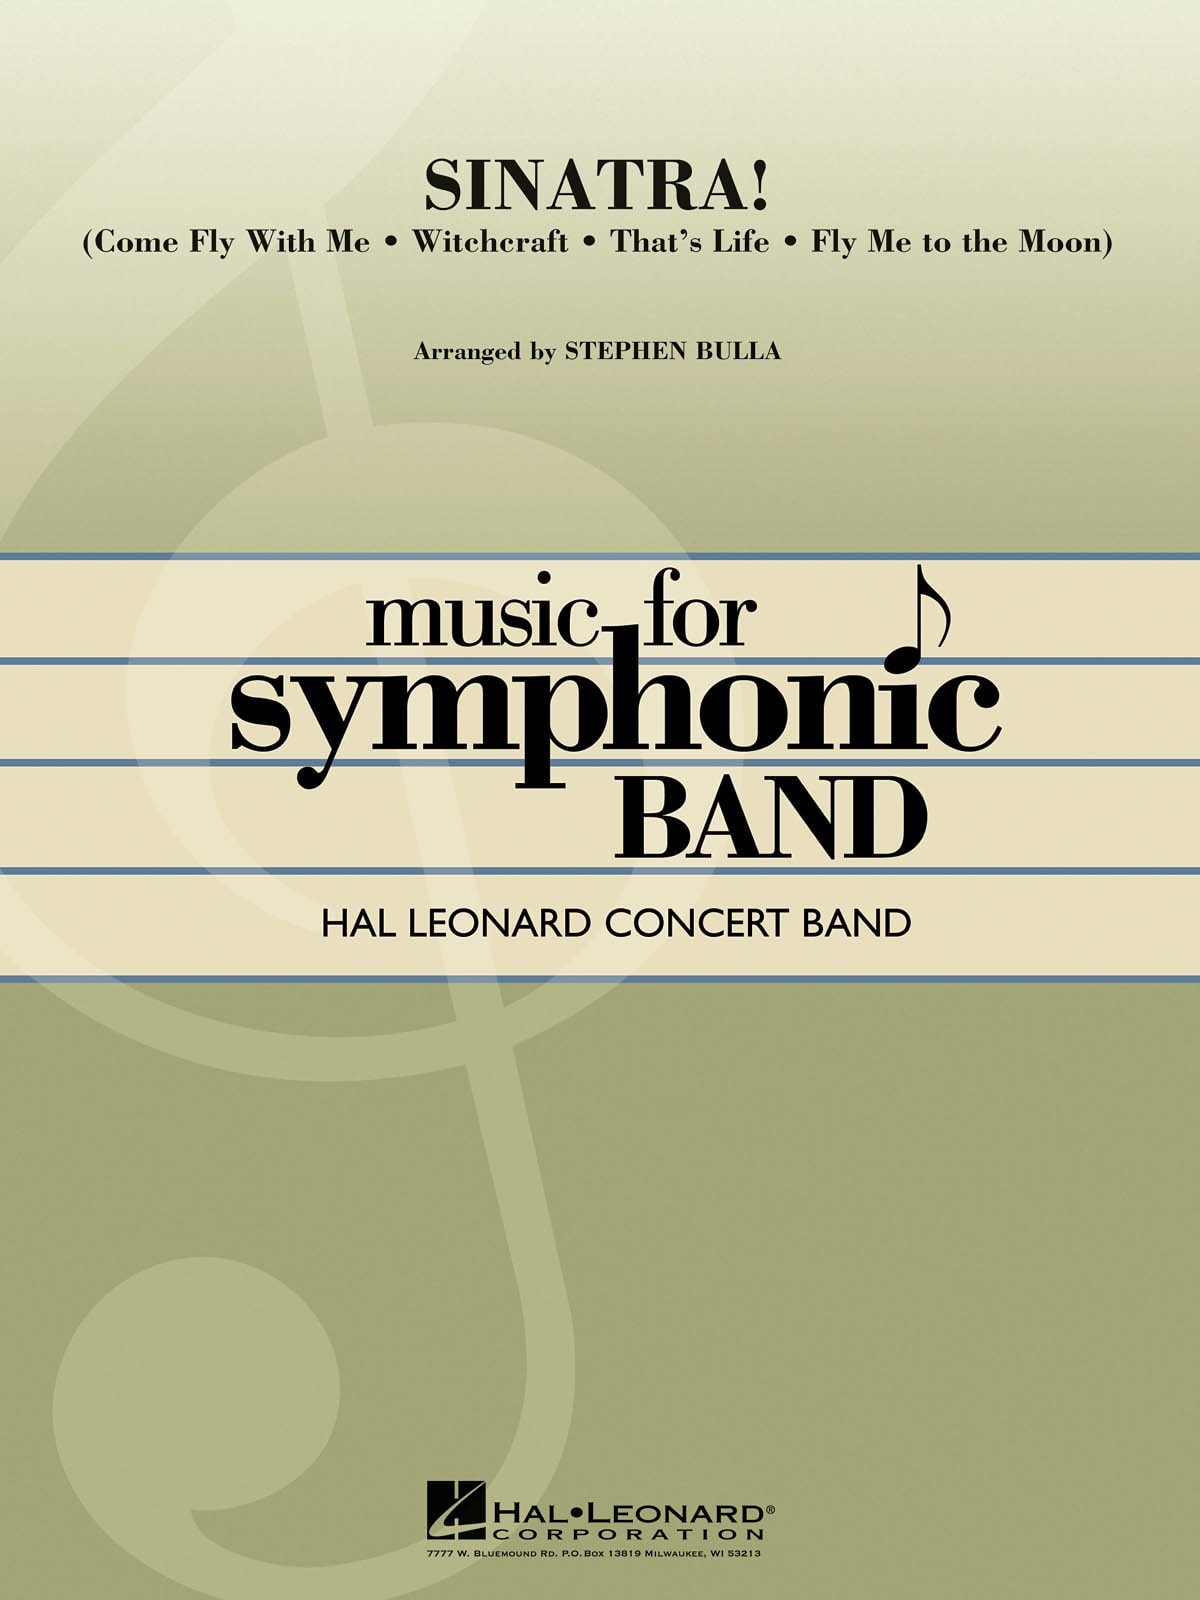 Sinatra! for Concert Band/Harmonie published by Hal Leonard - Set (Score & Parts)